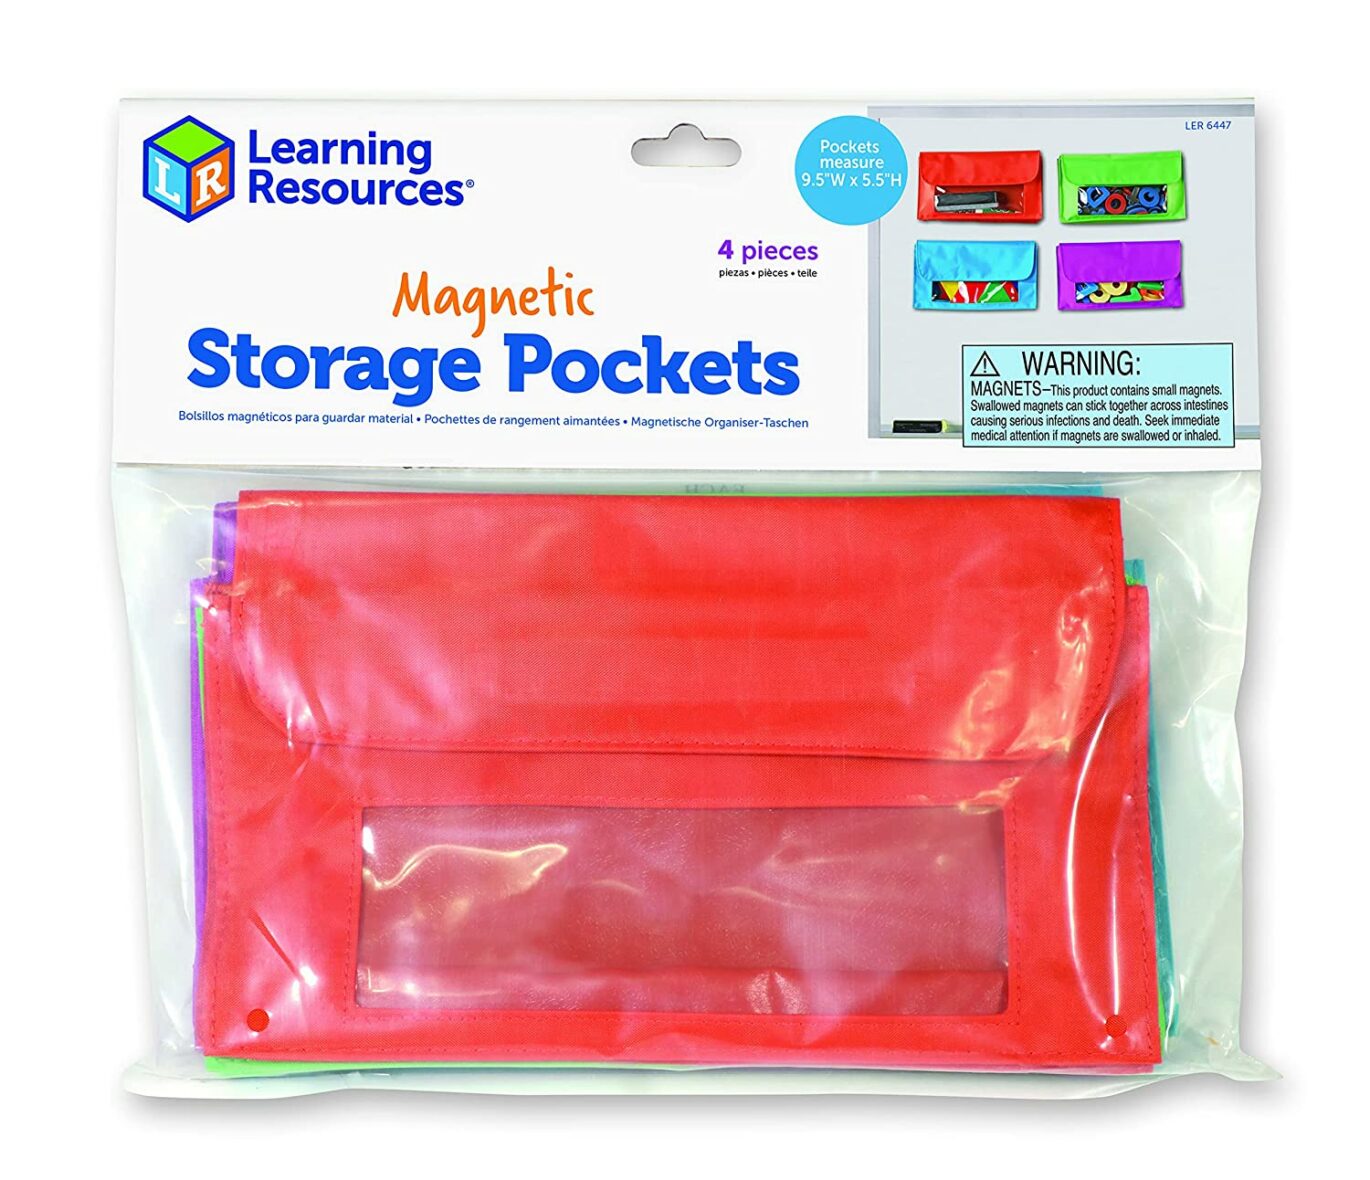 Magnetic Storage Pockets